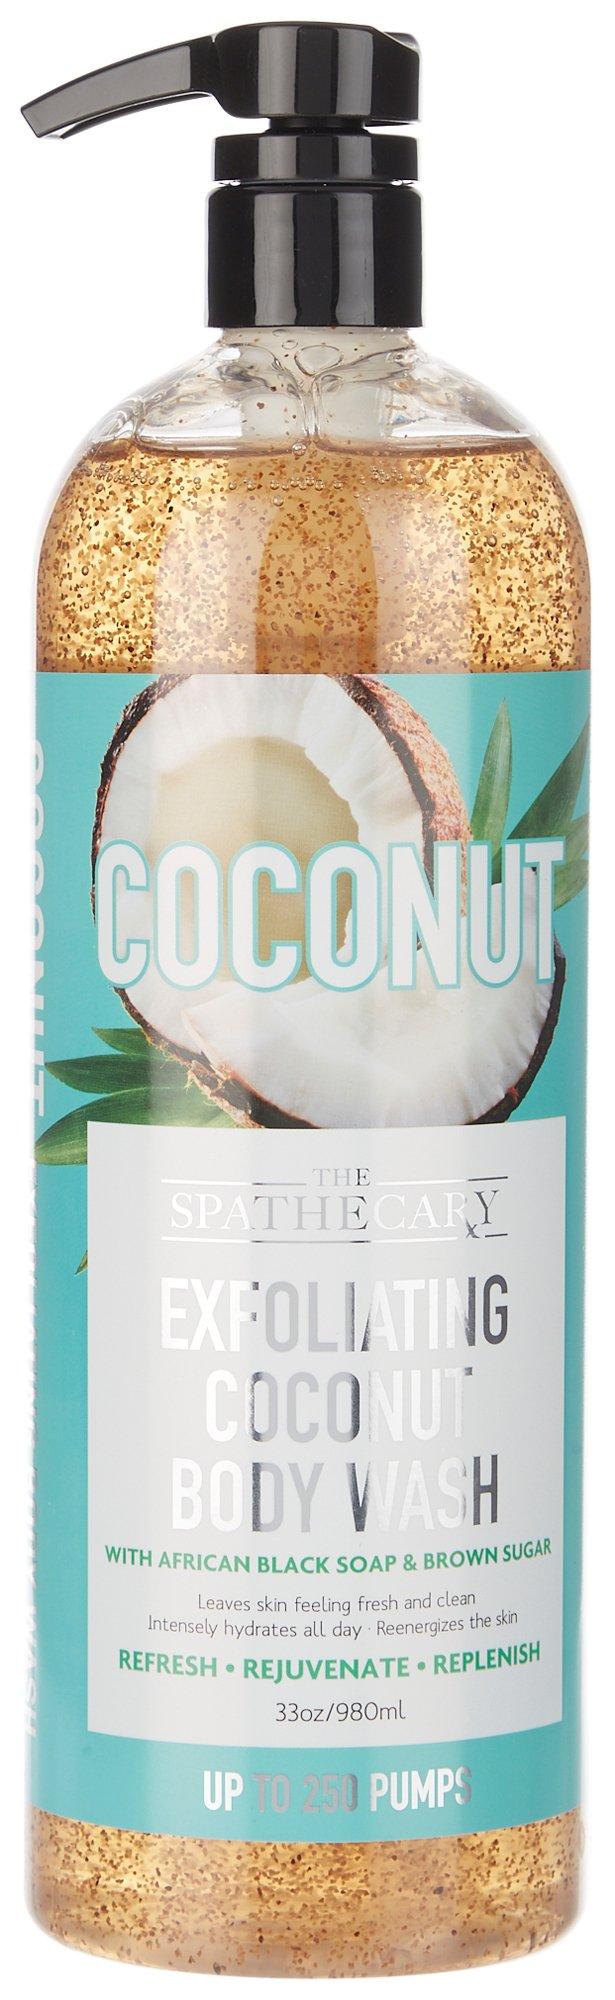 Exfoliating Coconut Body Wash